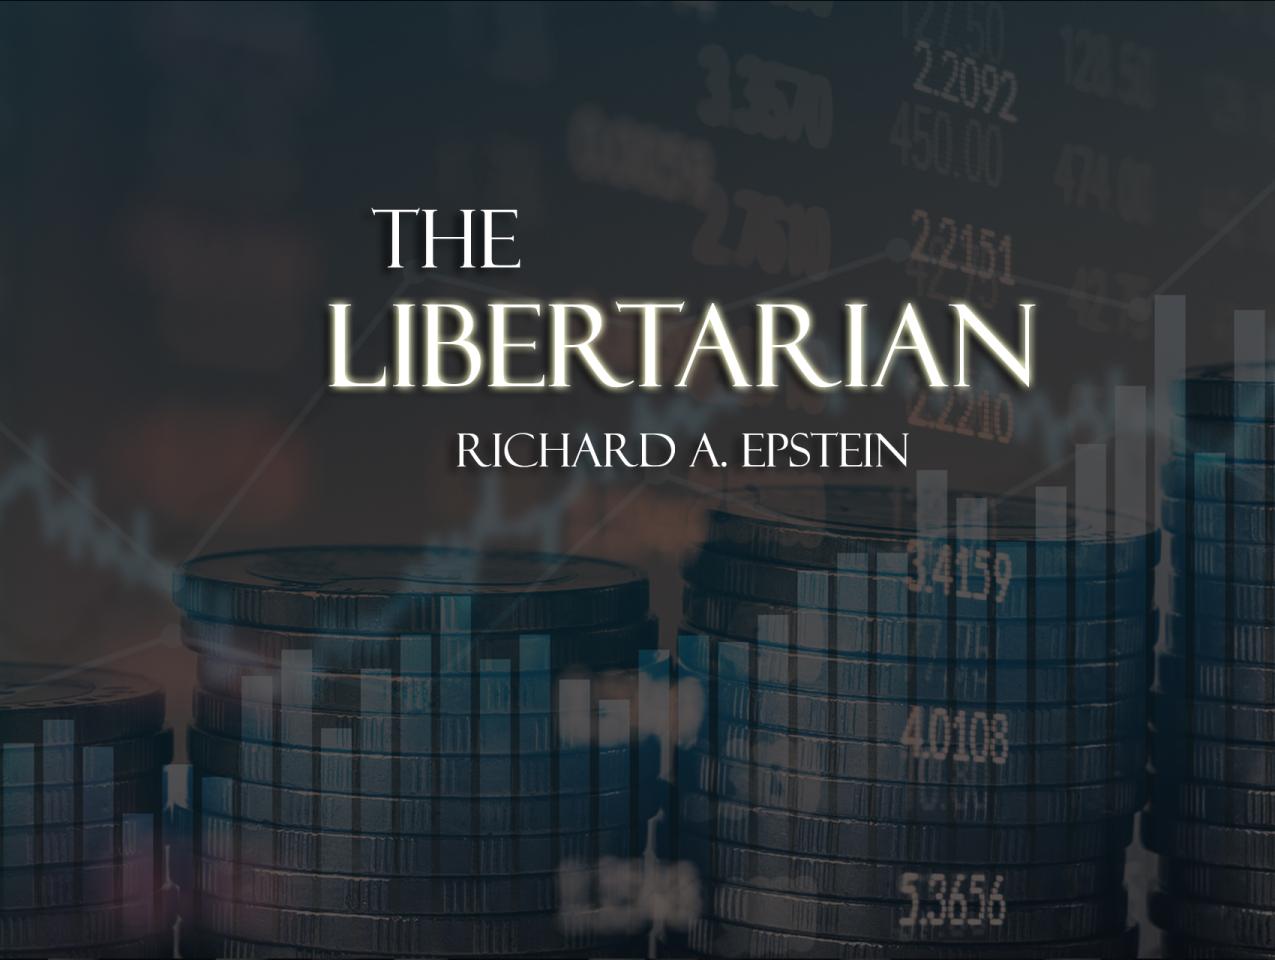 Libertarian-Economics.jpg